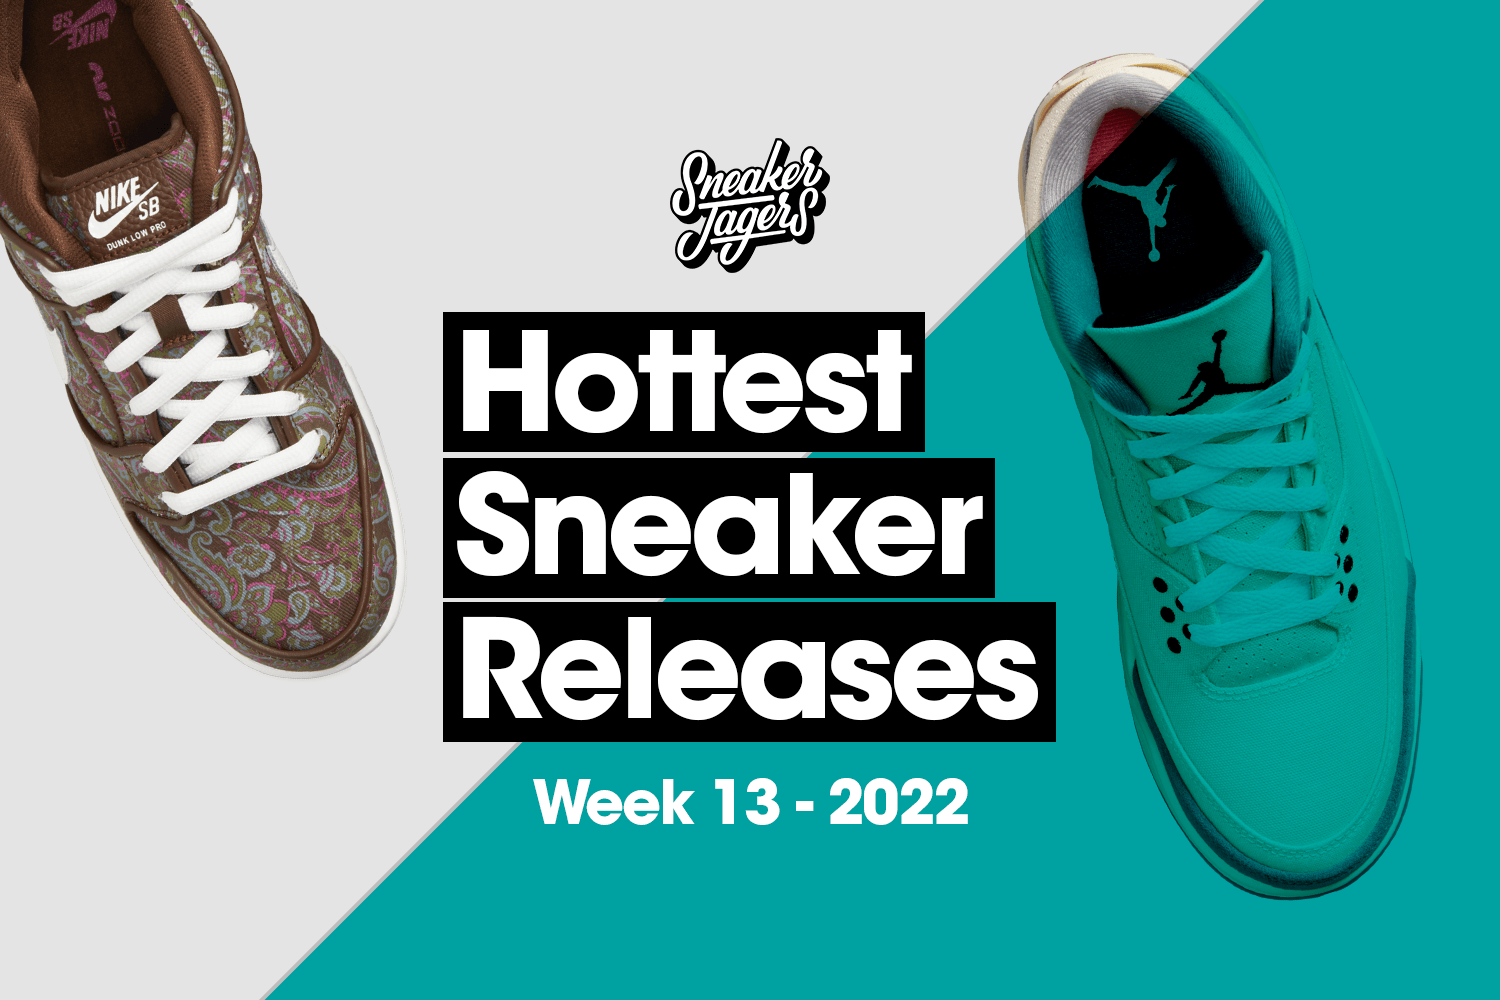 Hottest Sneaker Releases - Week 13